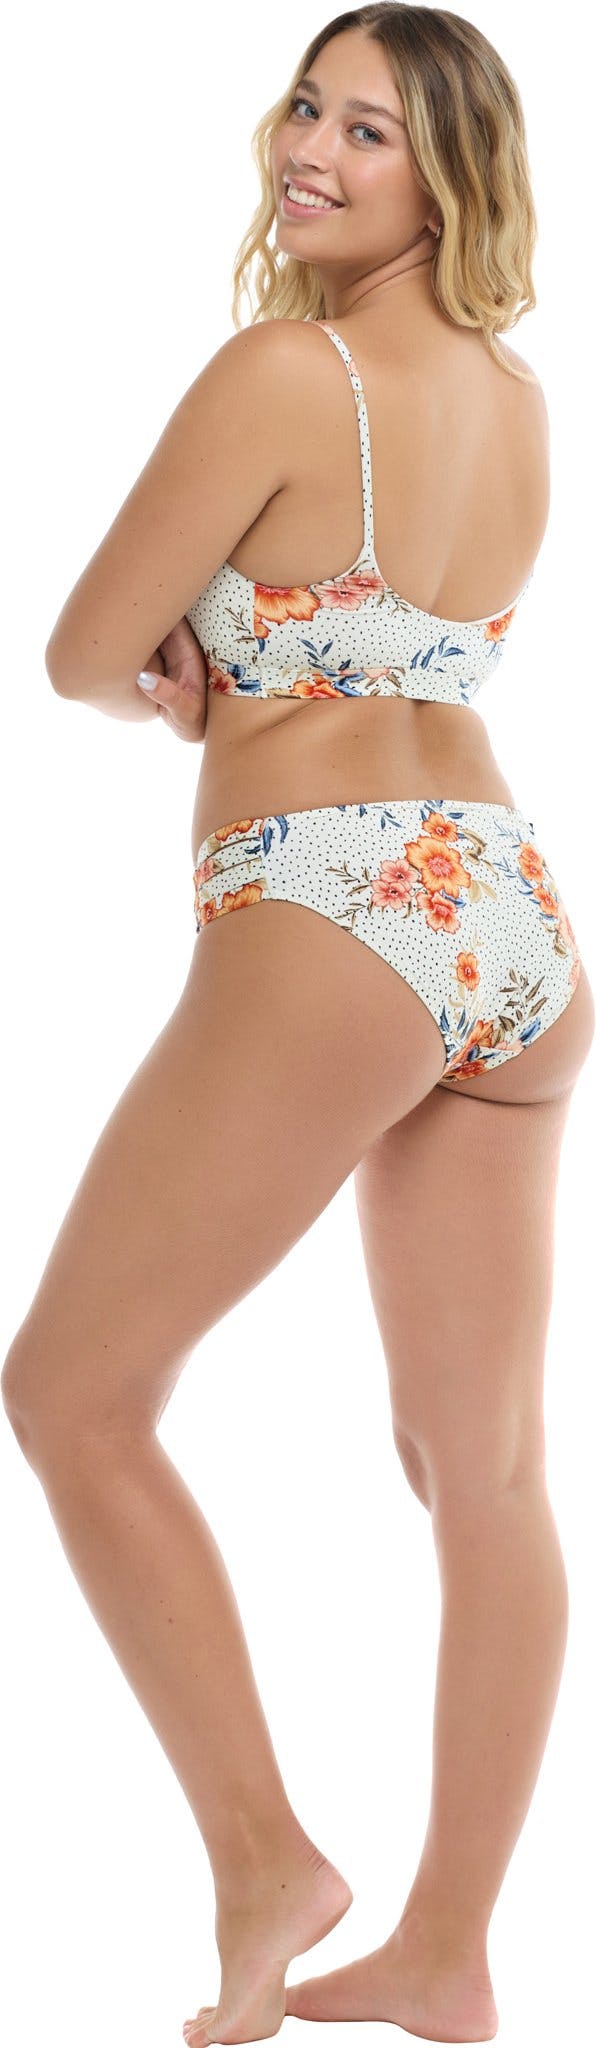 Product gallery image number 2 for product Corsica Nuevo Contempo Bikini Bottom - Women's